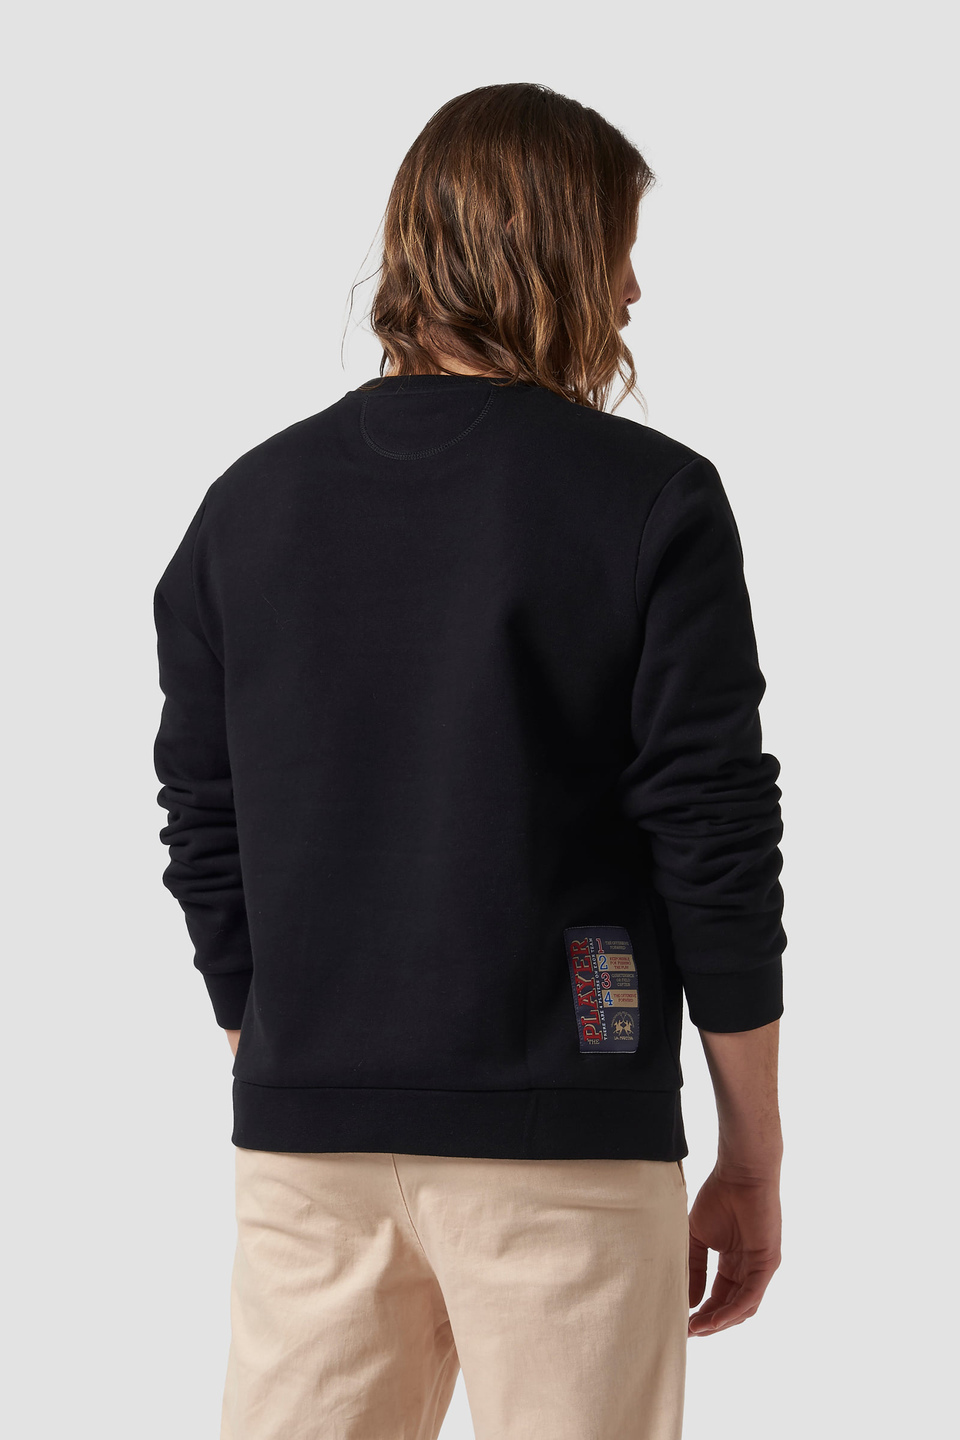 100% cotton crew-neck sweatshirt - La Martina - Official Online Shop